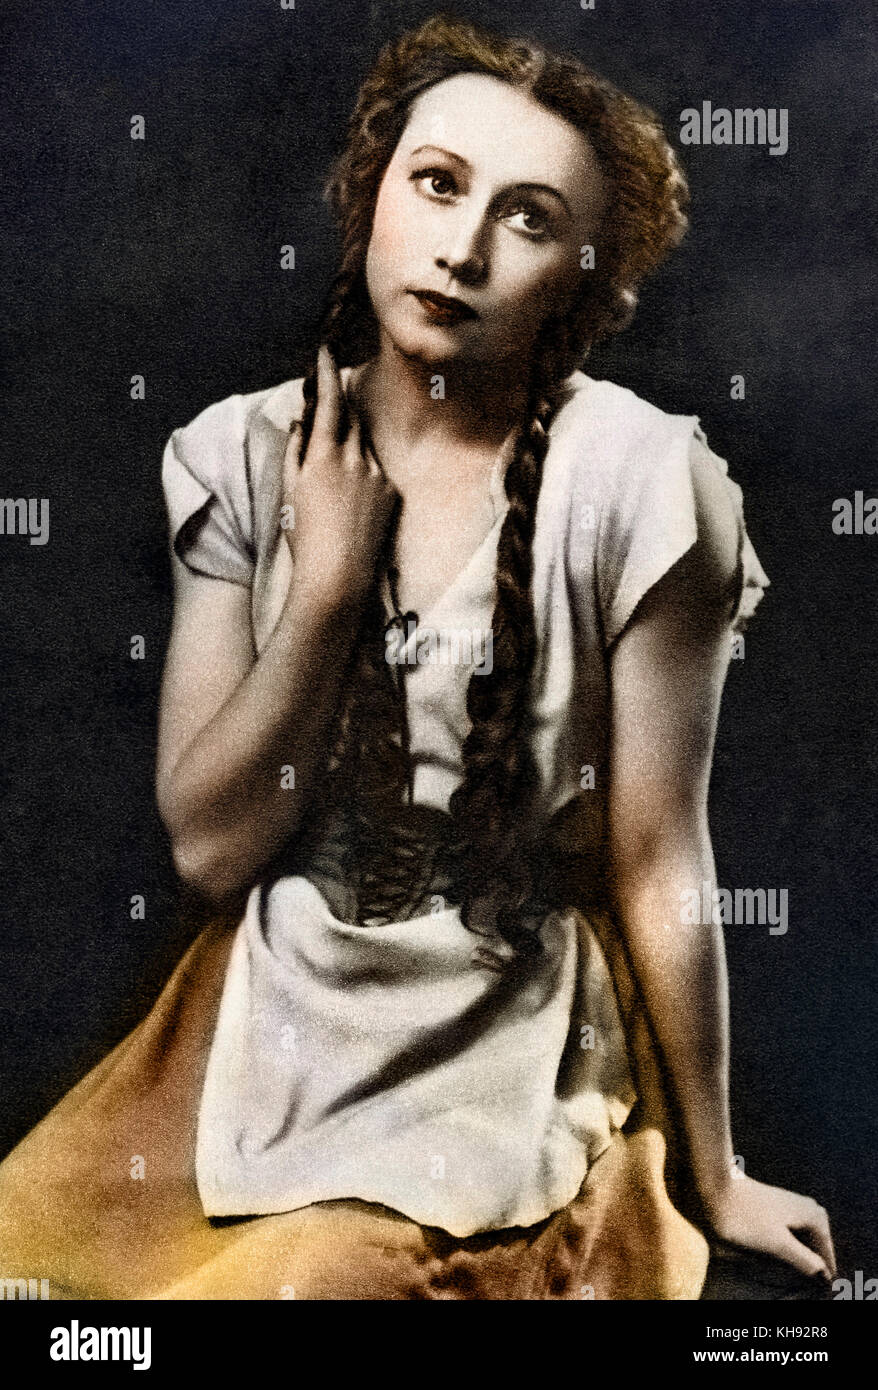 Galina Ulanova - Porträt der Russischen Ballerina in Sergej Prokofjews Ballett "Cinderella", 1945. GU: 8 Januar 1910 - 21. März 1998. Stockfoto